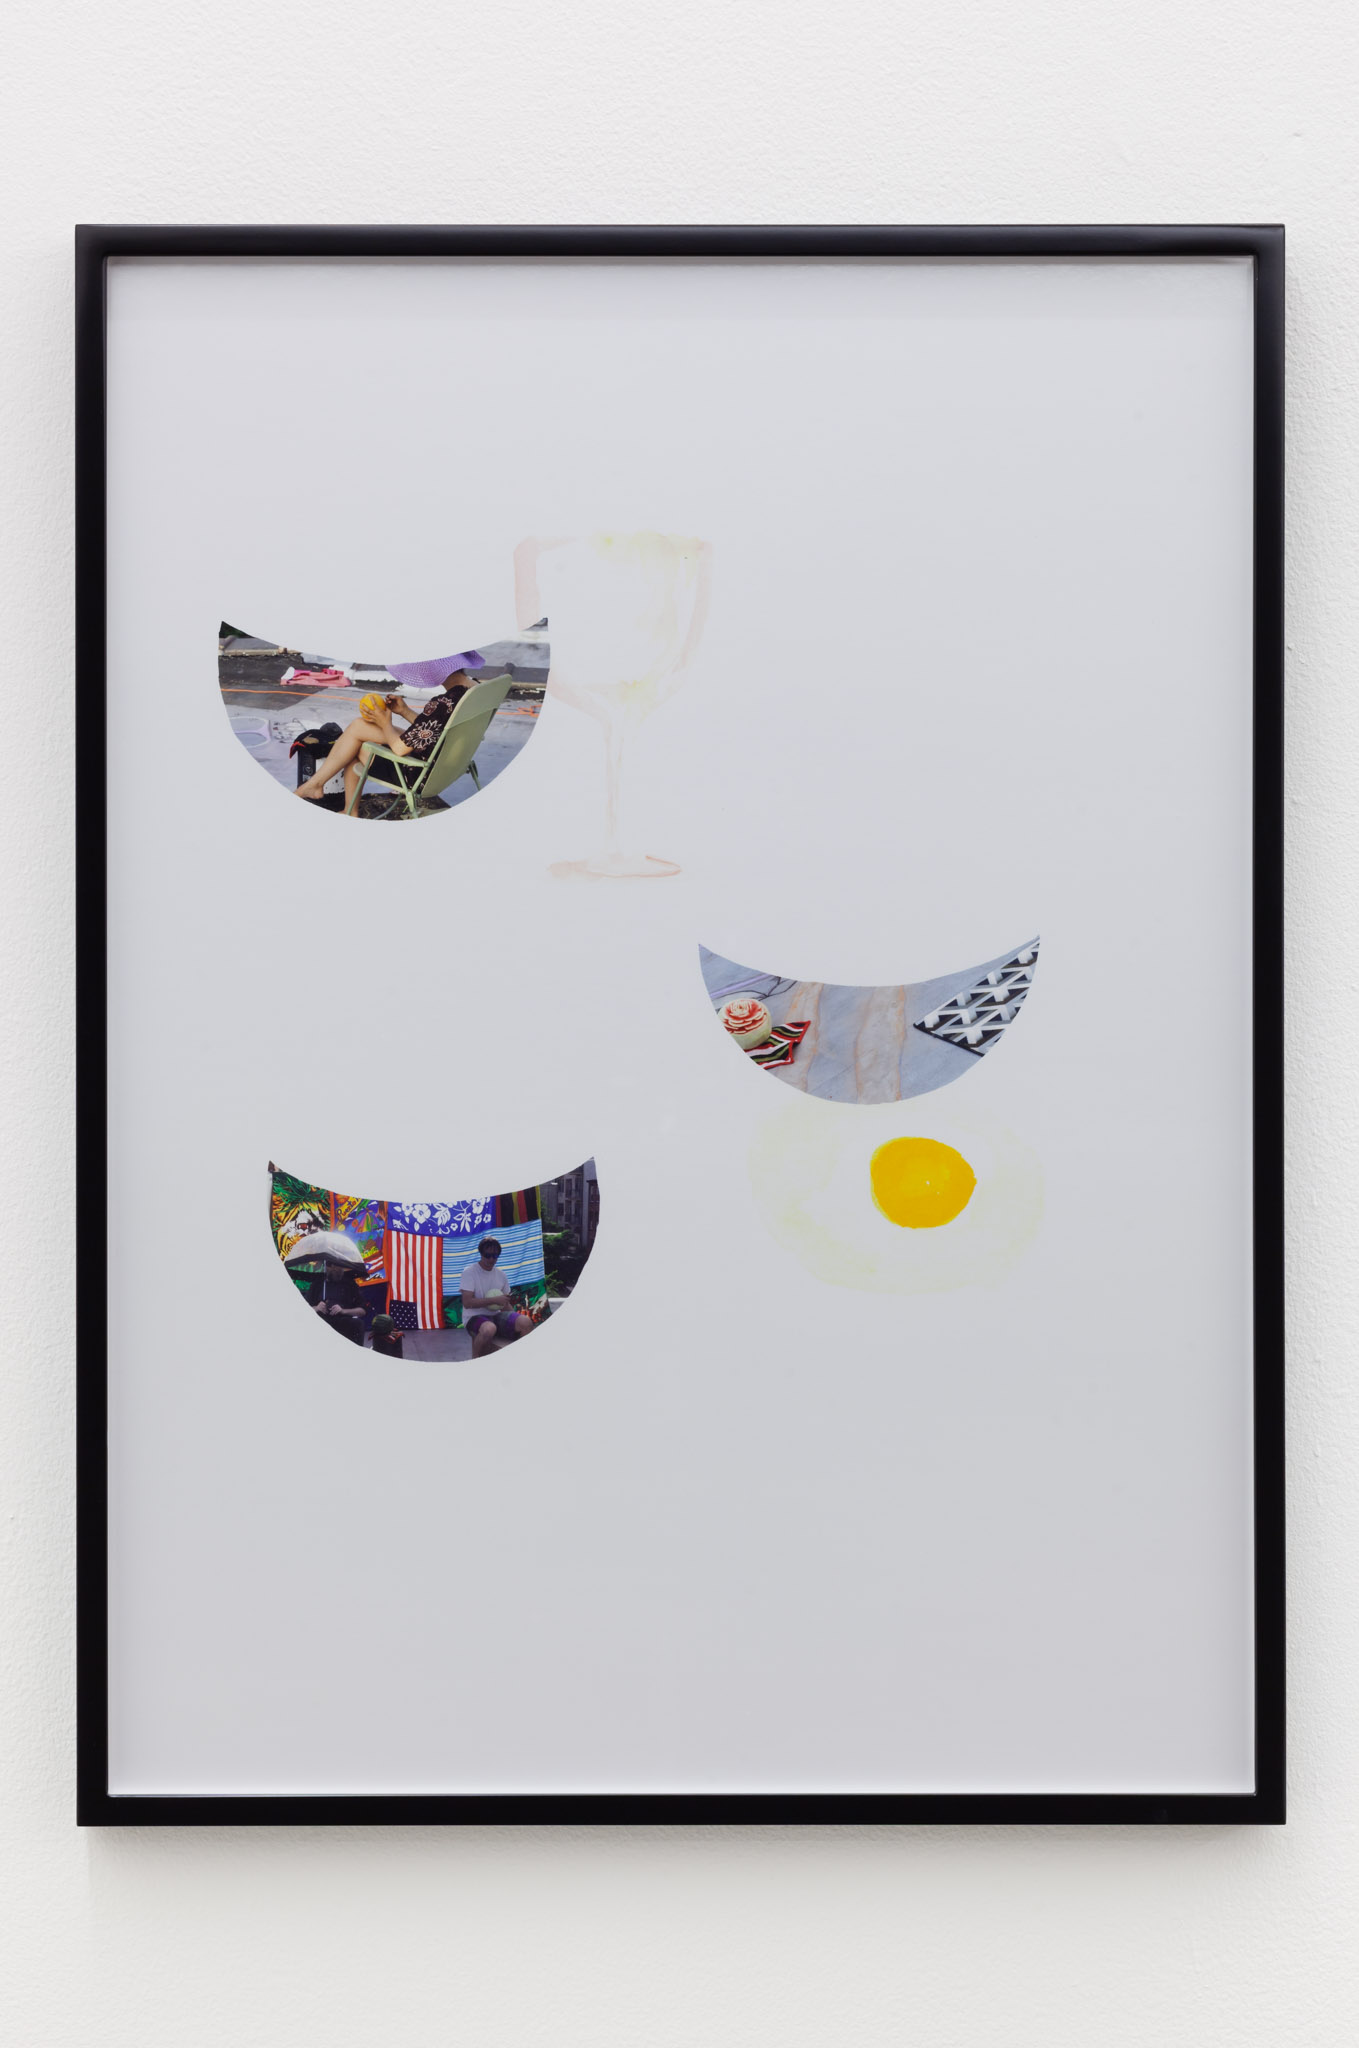 Motif, 2014, Framed print, 62.5 x 47 cm, 24.61 x 18.5 ins. House of Gaga presents Single Moms